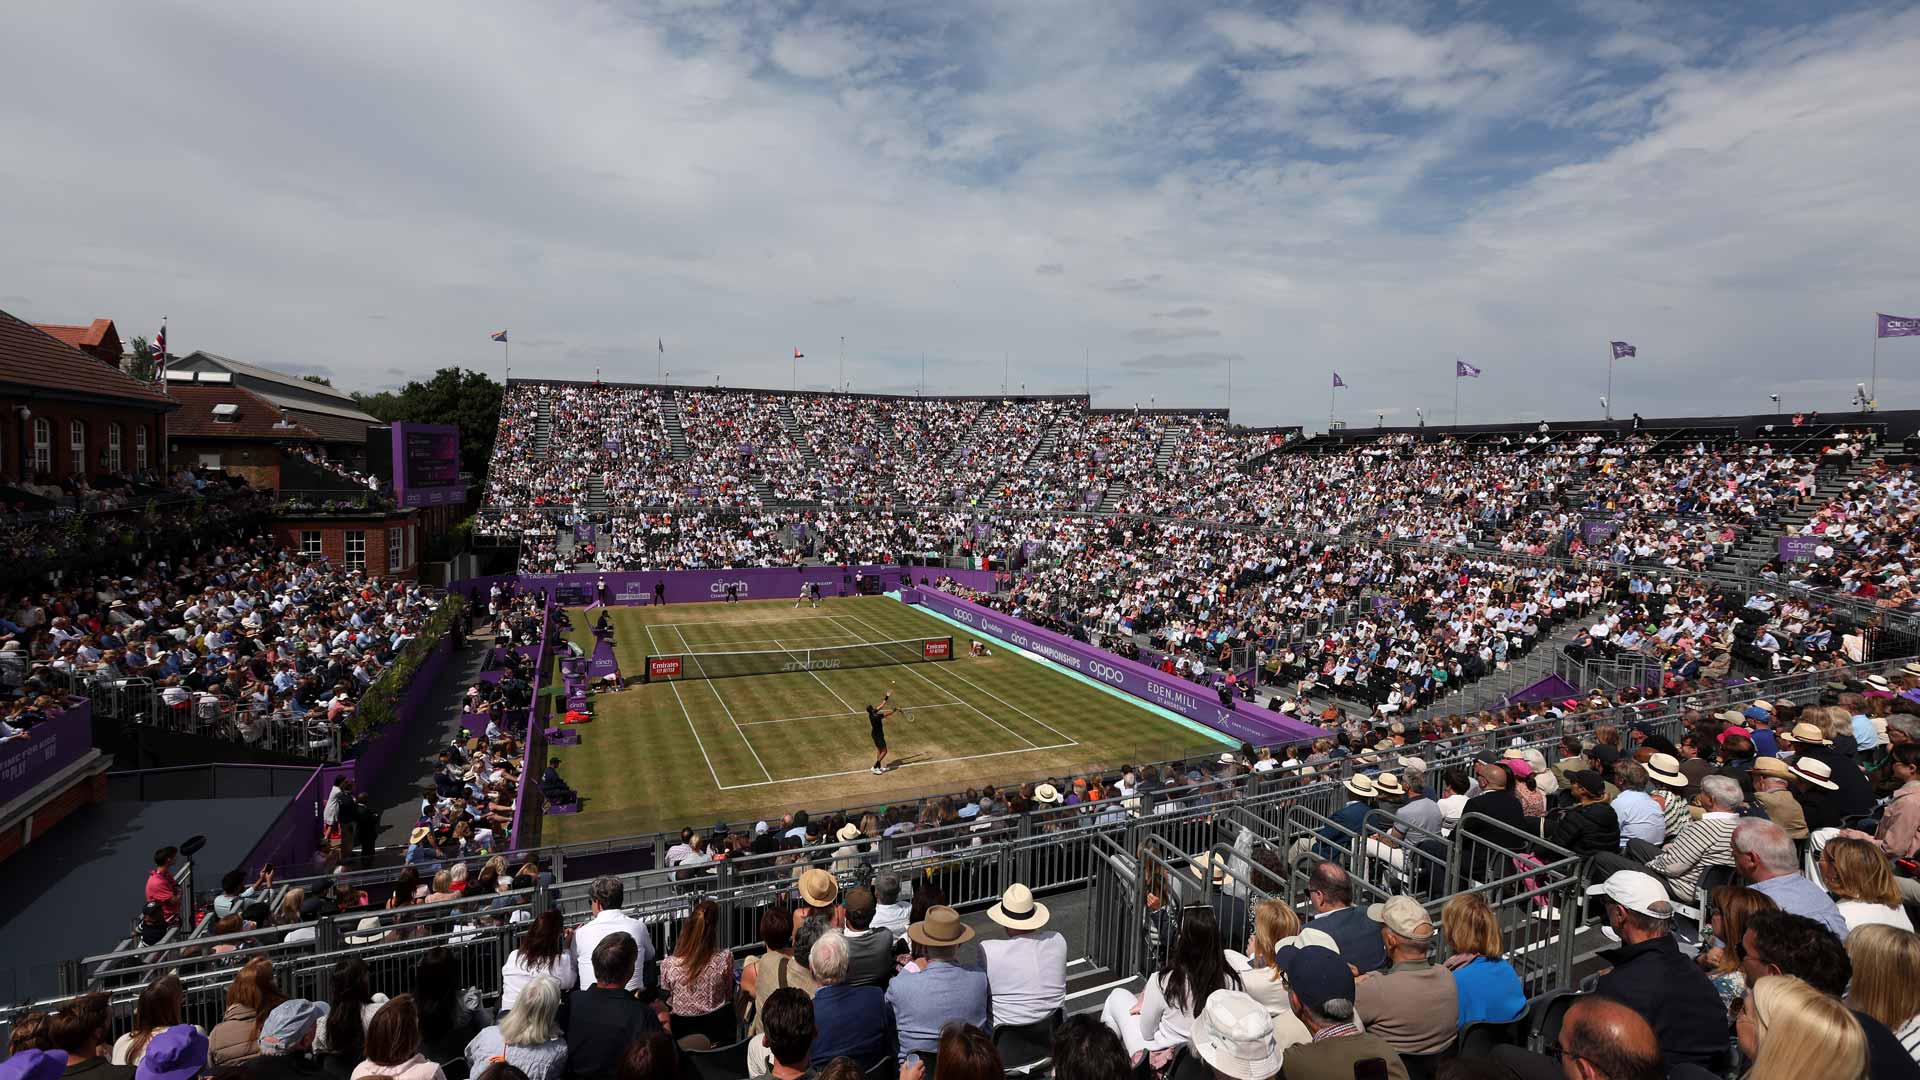 London / Queen's Club, Overview, ATP Tour